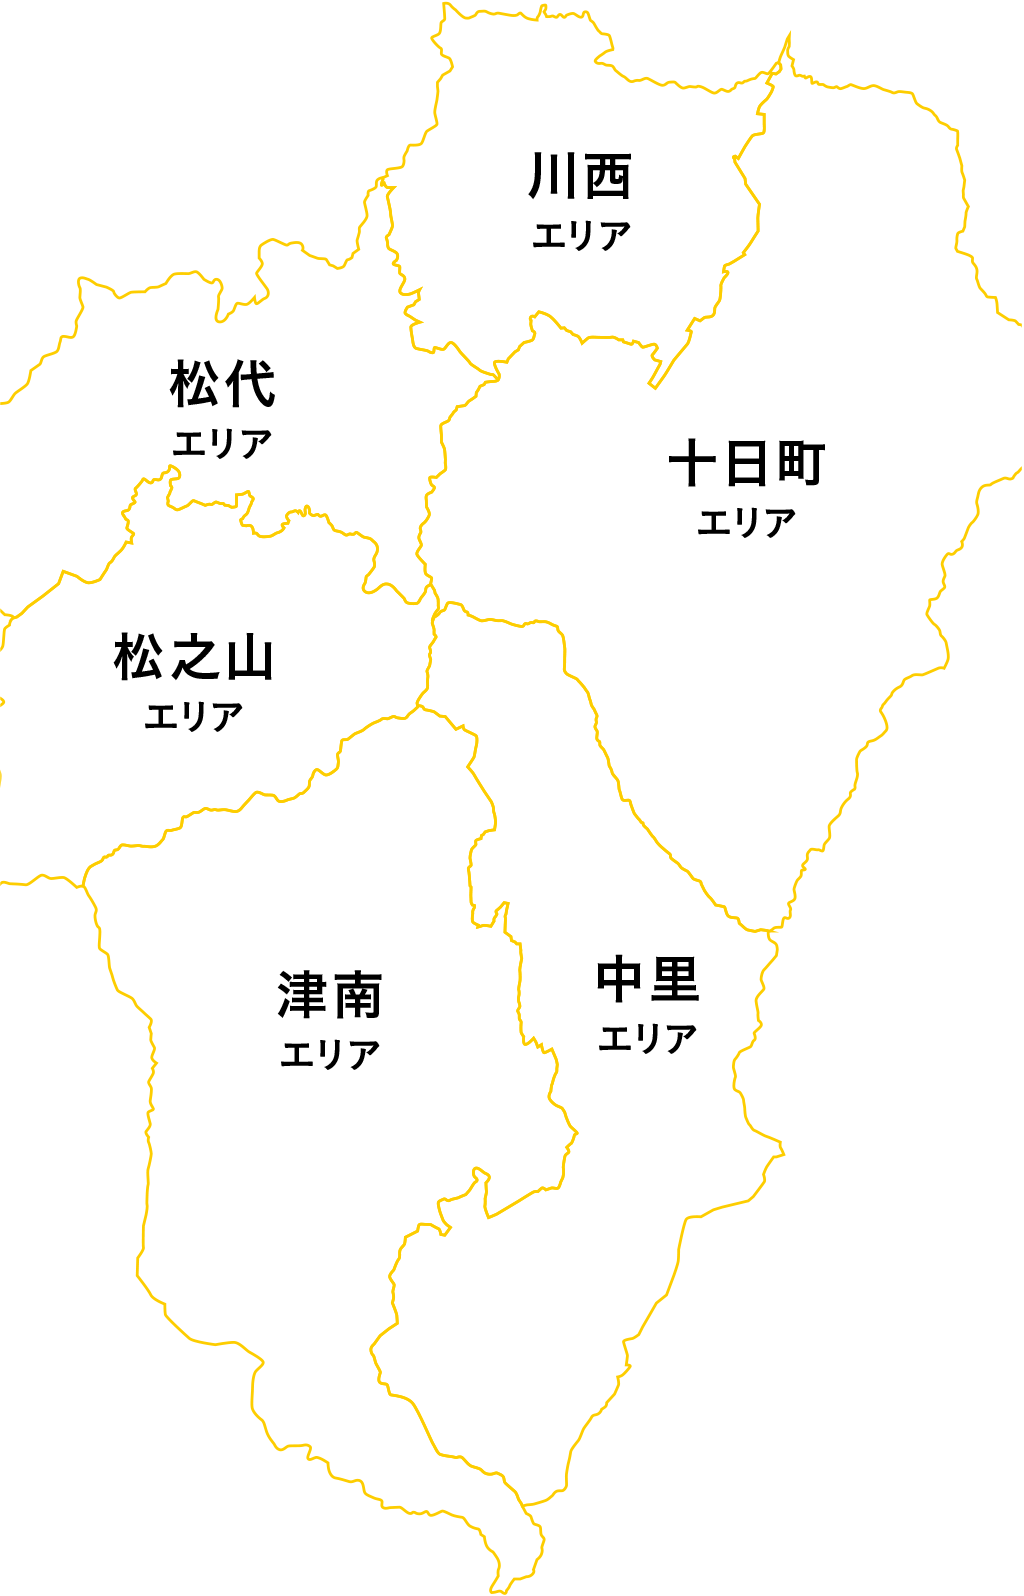 Main areas and representative art works + facilities of Echigo-Tsumari Art Field as seen from the map